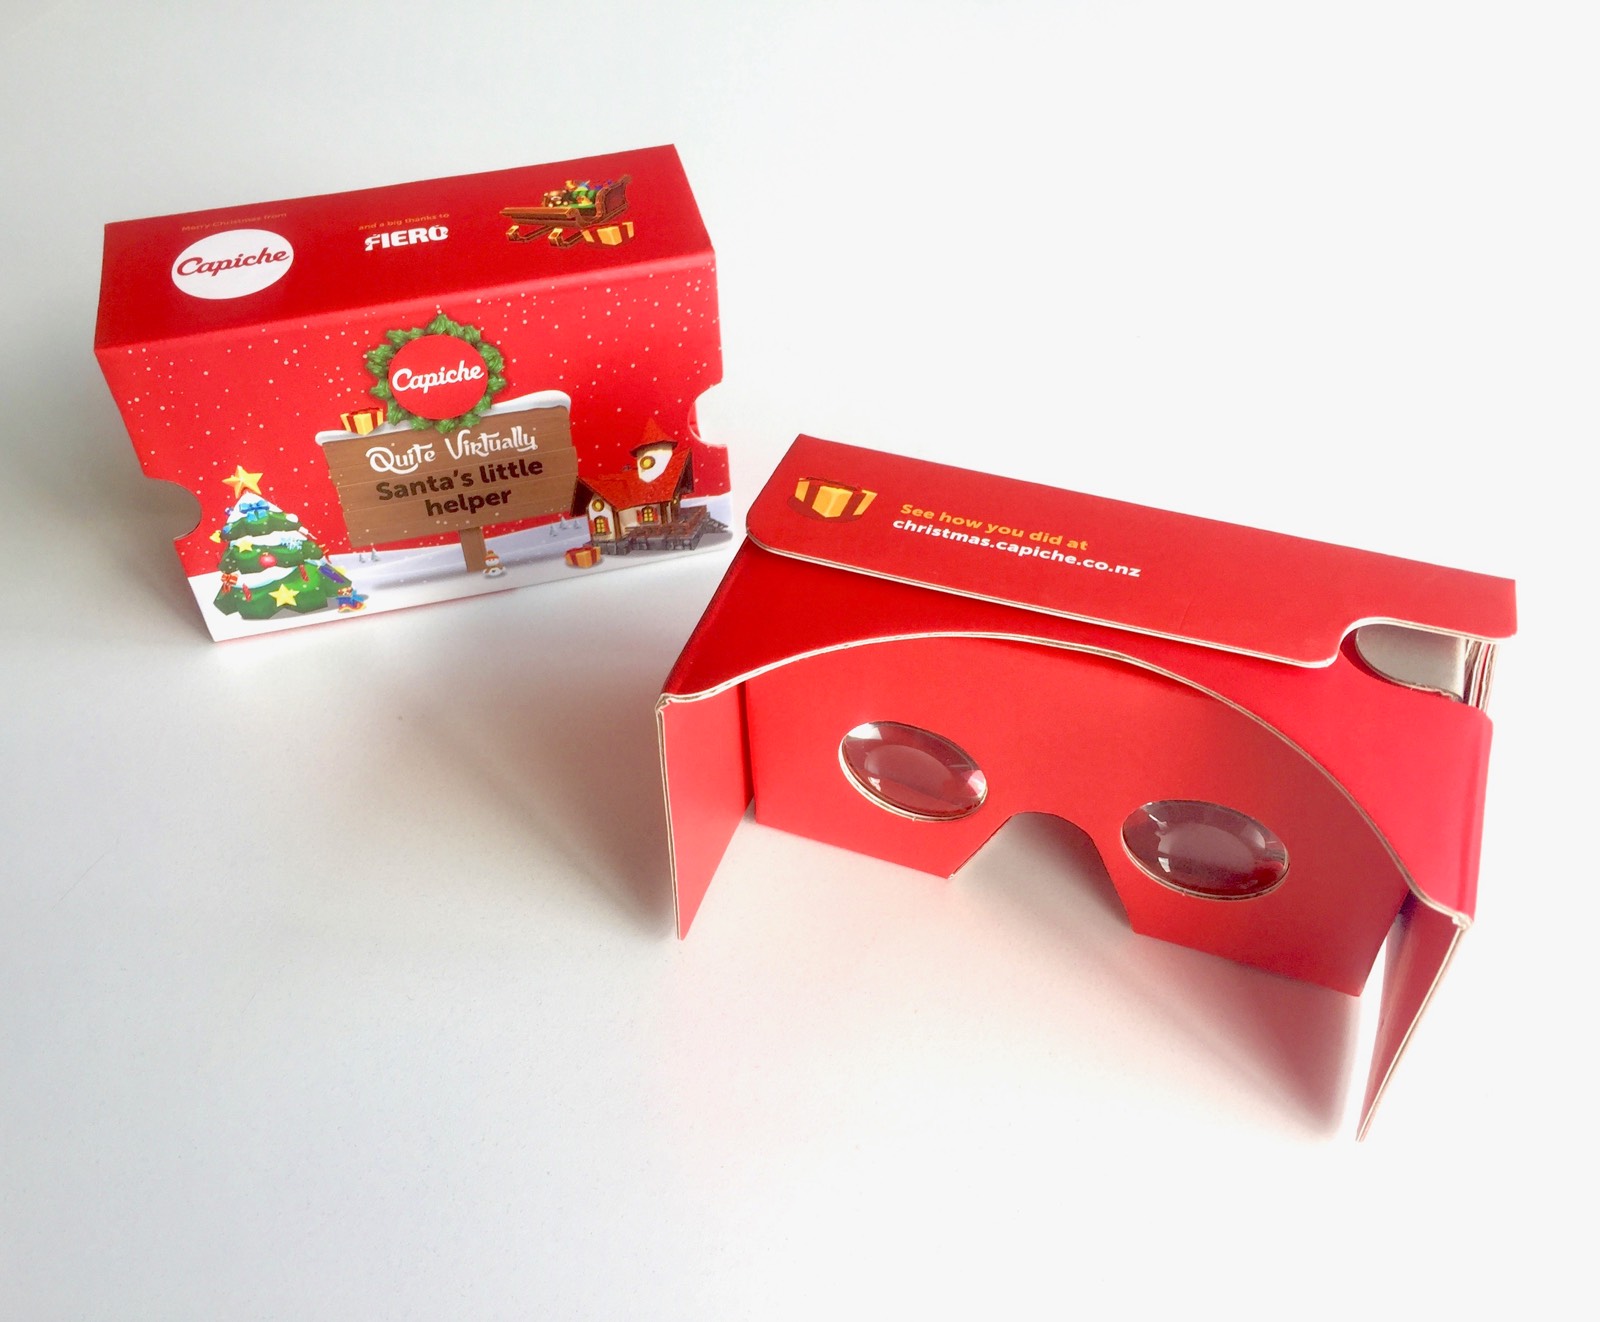 Branded Google Cardboard VR headset